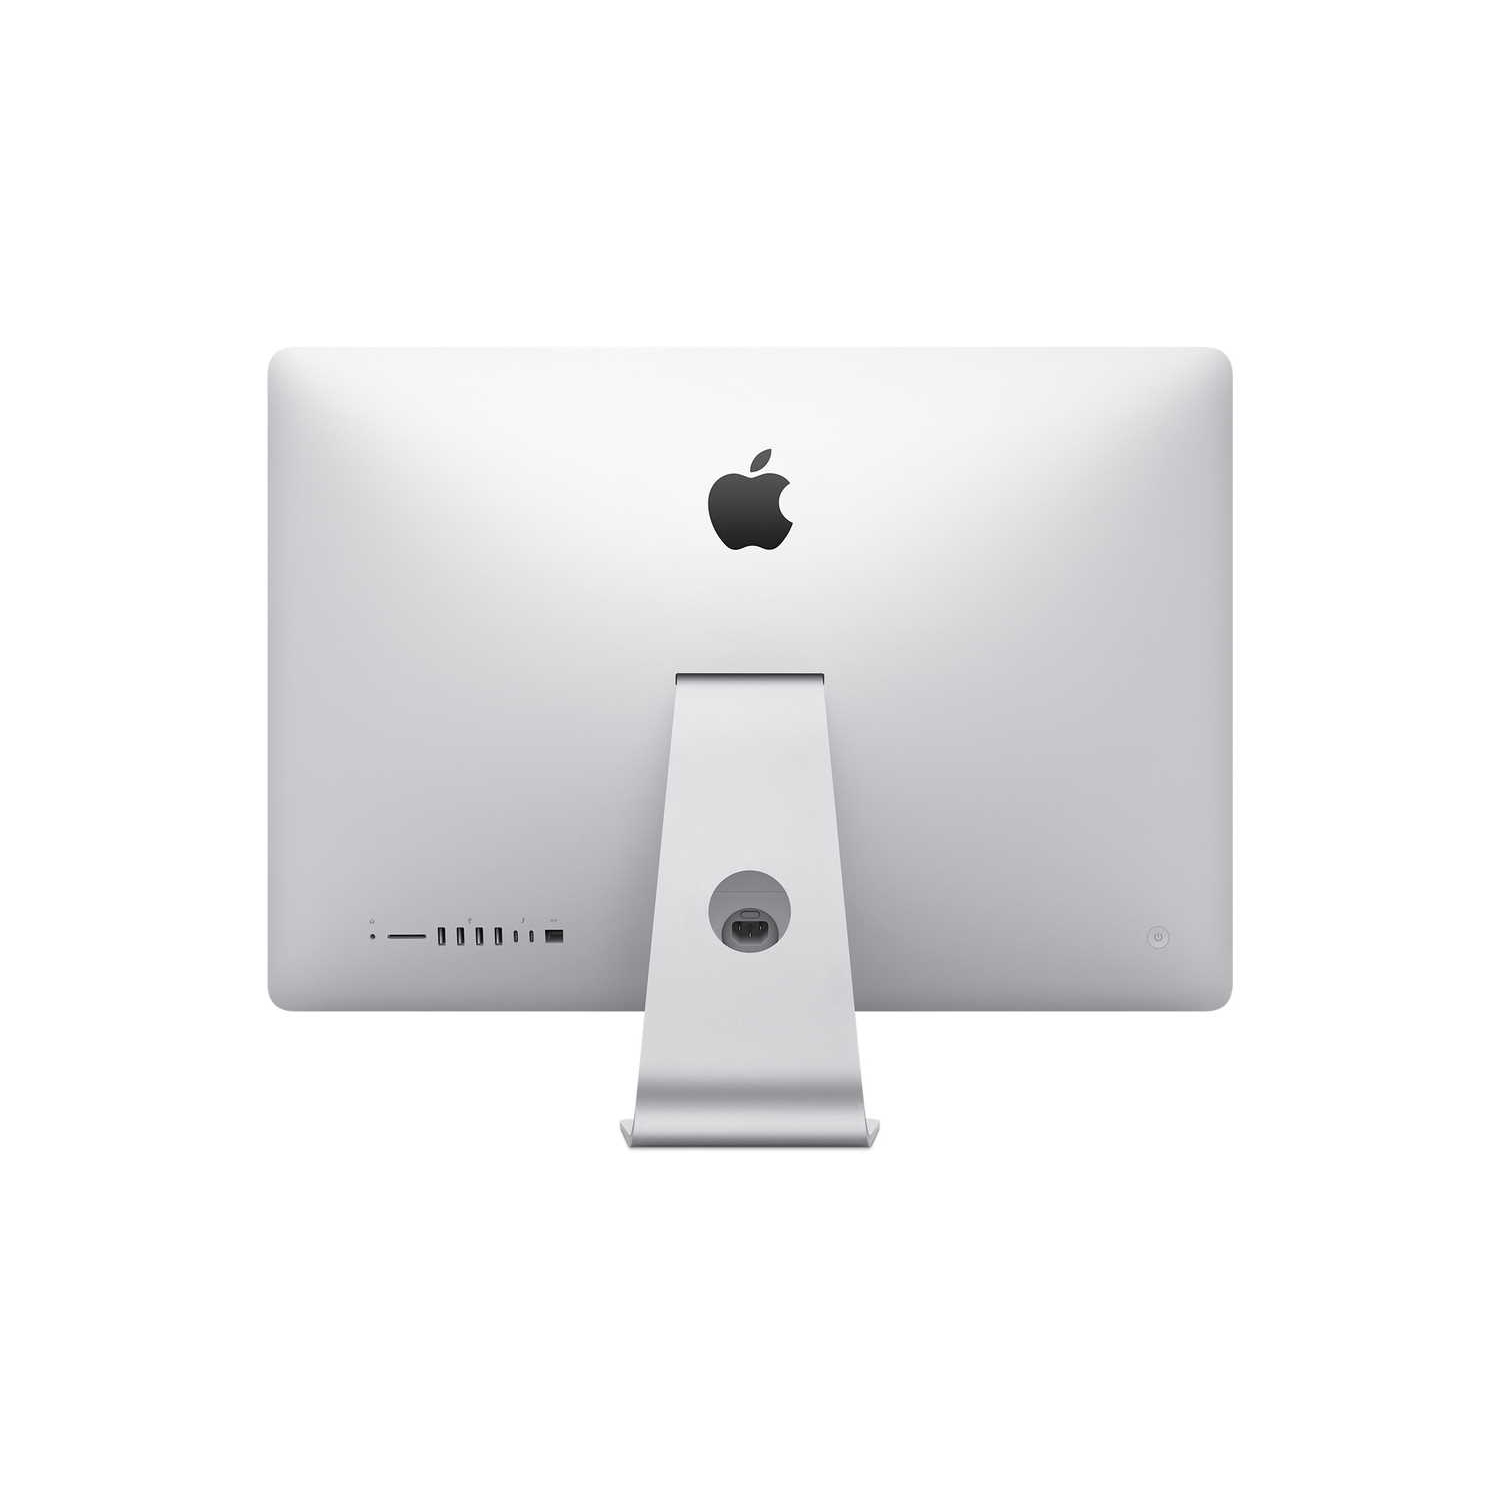 Refurbished - Good) iMac 27-inch (Retina 5K) 3.1GHZ 6-Core i5 